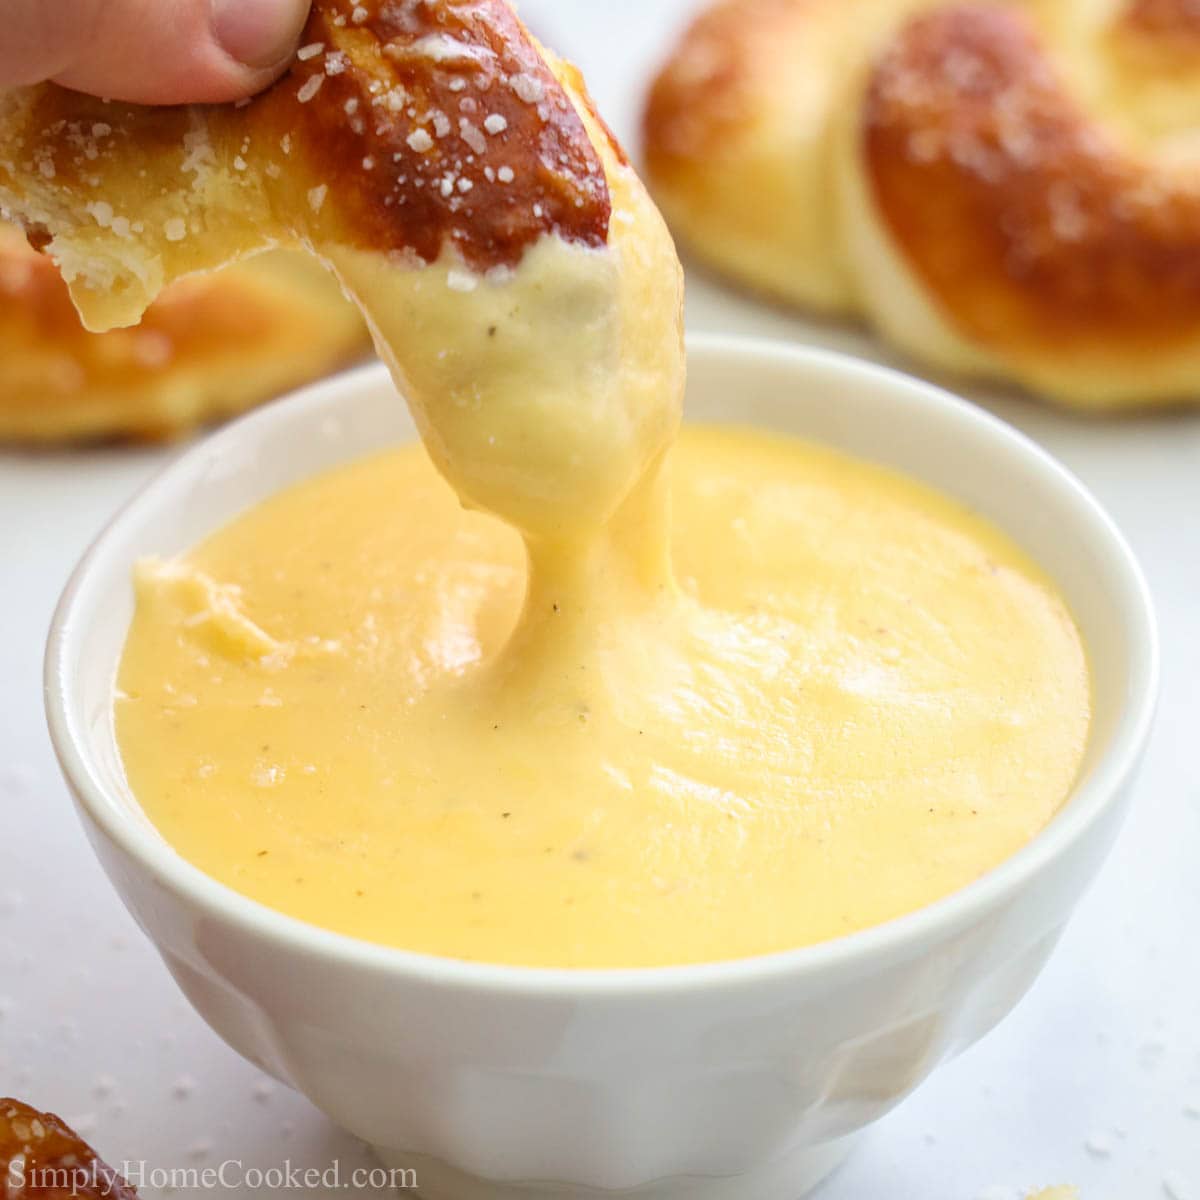 https://simplyhomecooked.com/wp-content/uploads/2022/06/pretzel-cheese-dip-5.jpg